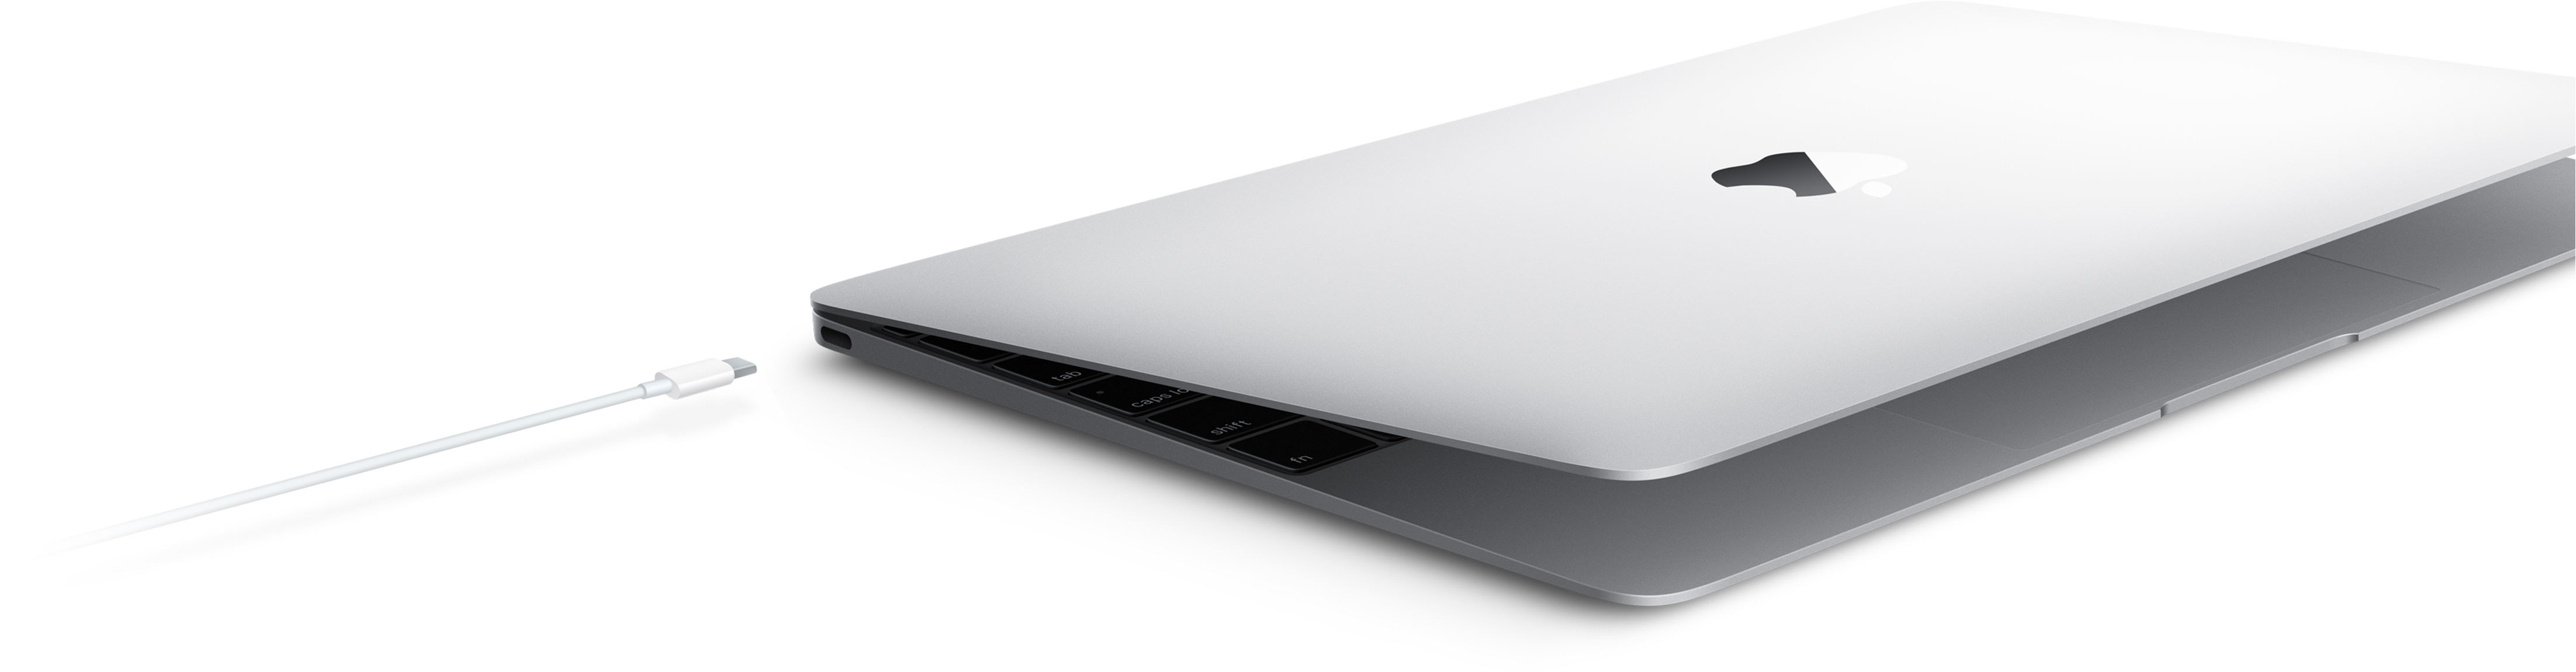 USB-C port of new MacBooks